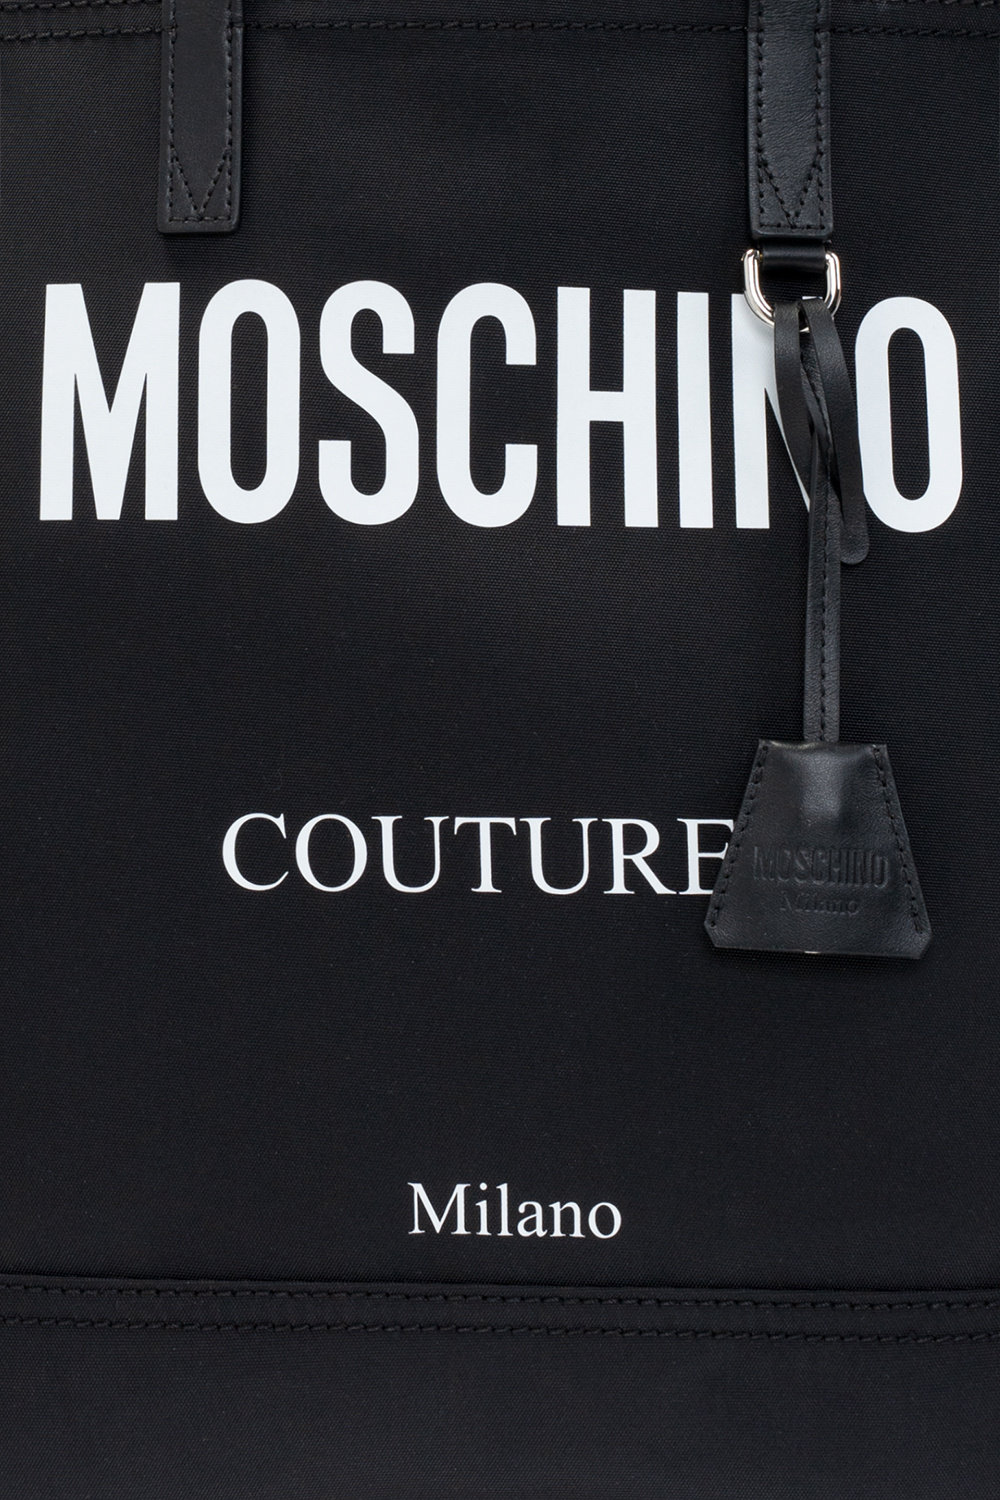 Moschino Chanel Pre-Owned 2005 Wild Stitch CC tote bag